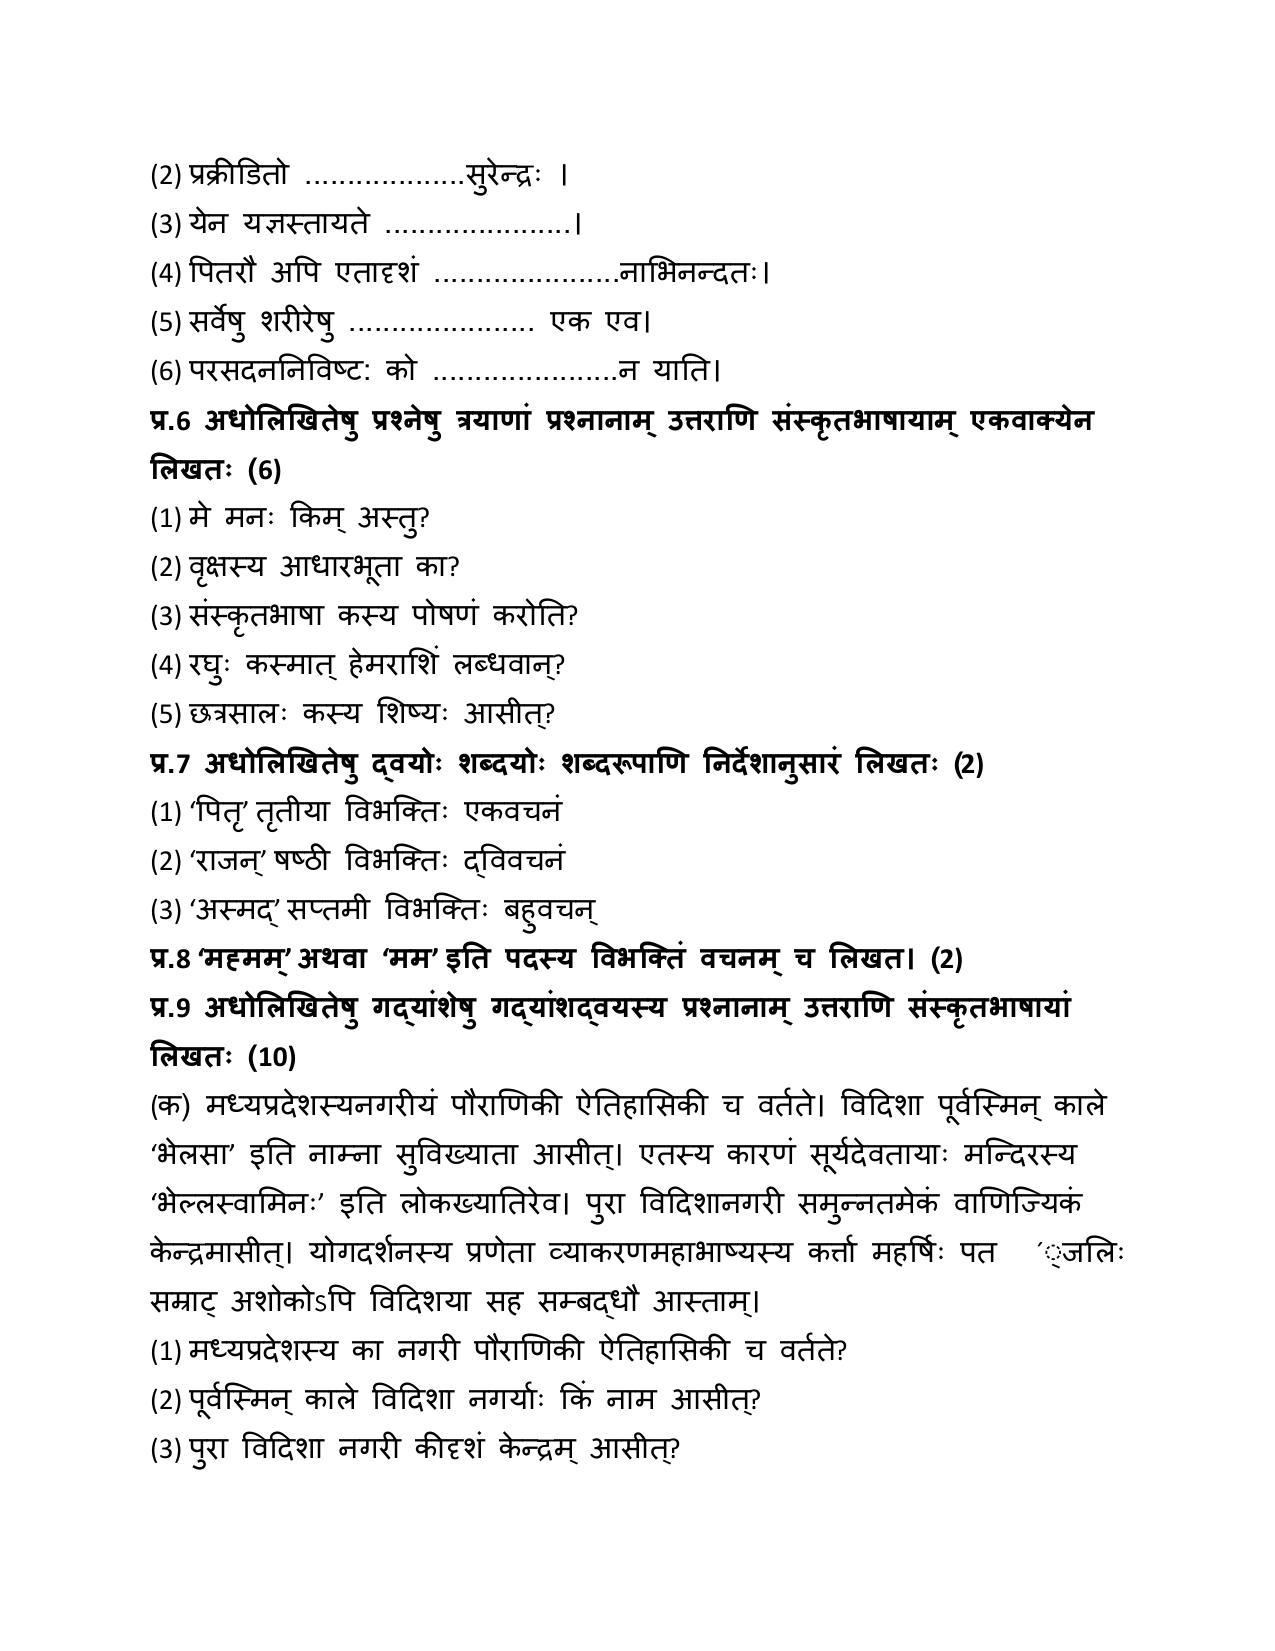 MP Board Class 10 Sanskrit General 2018 Question Paper - Page 3